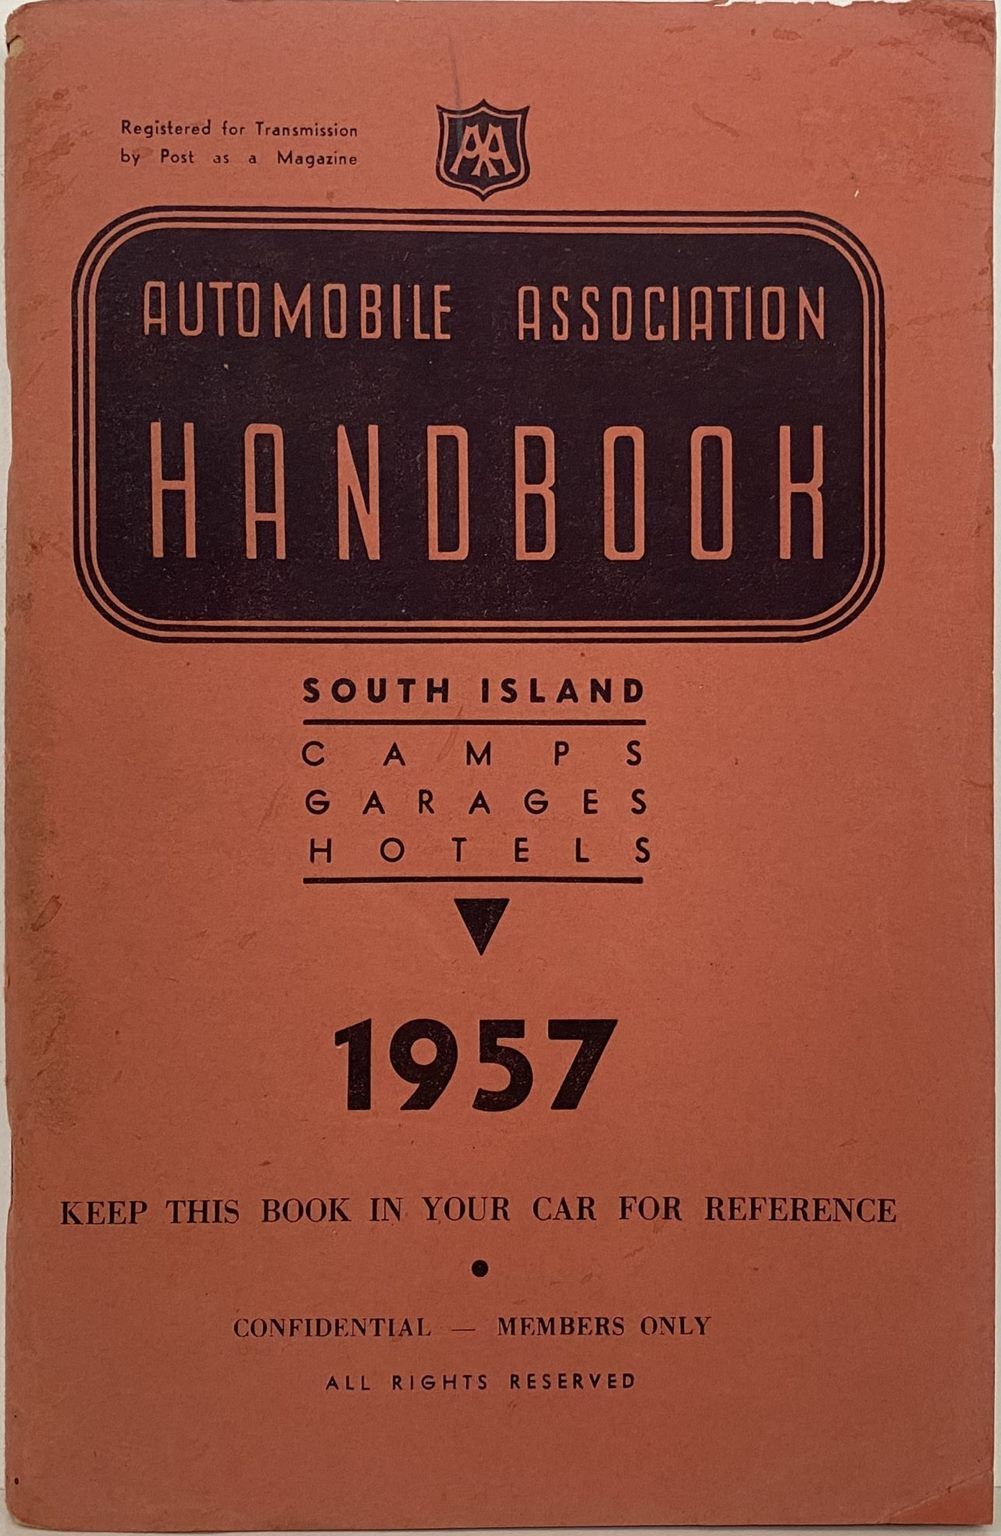 Automobile Association HANDBOOK: South Island 1957